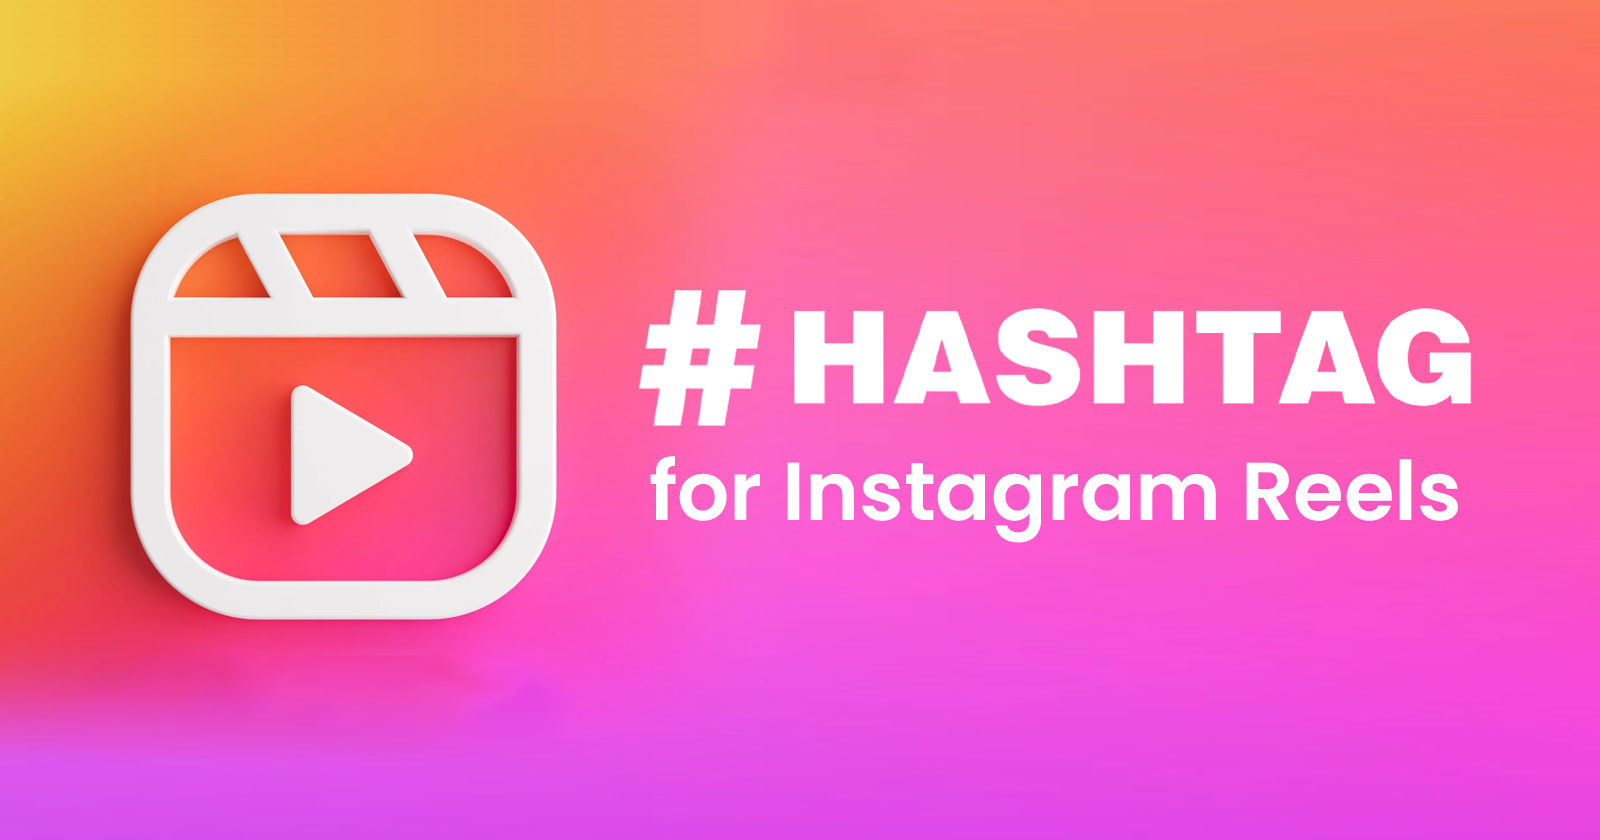 Hashtags for Instagram Reels